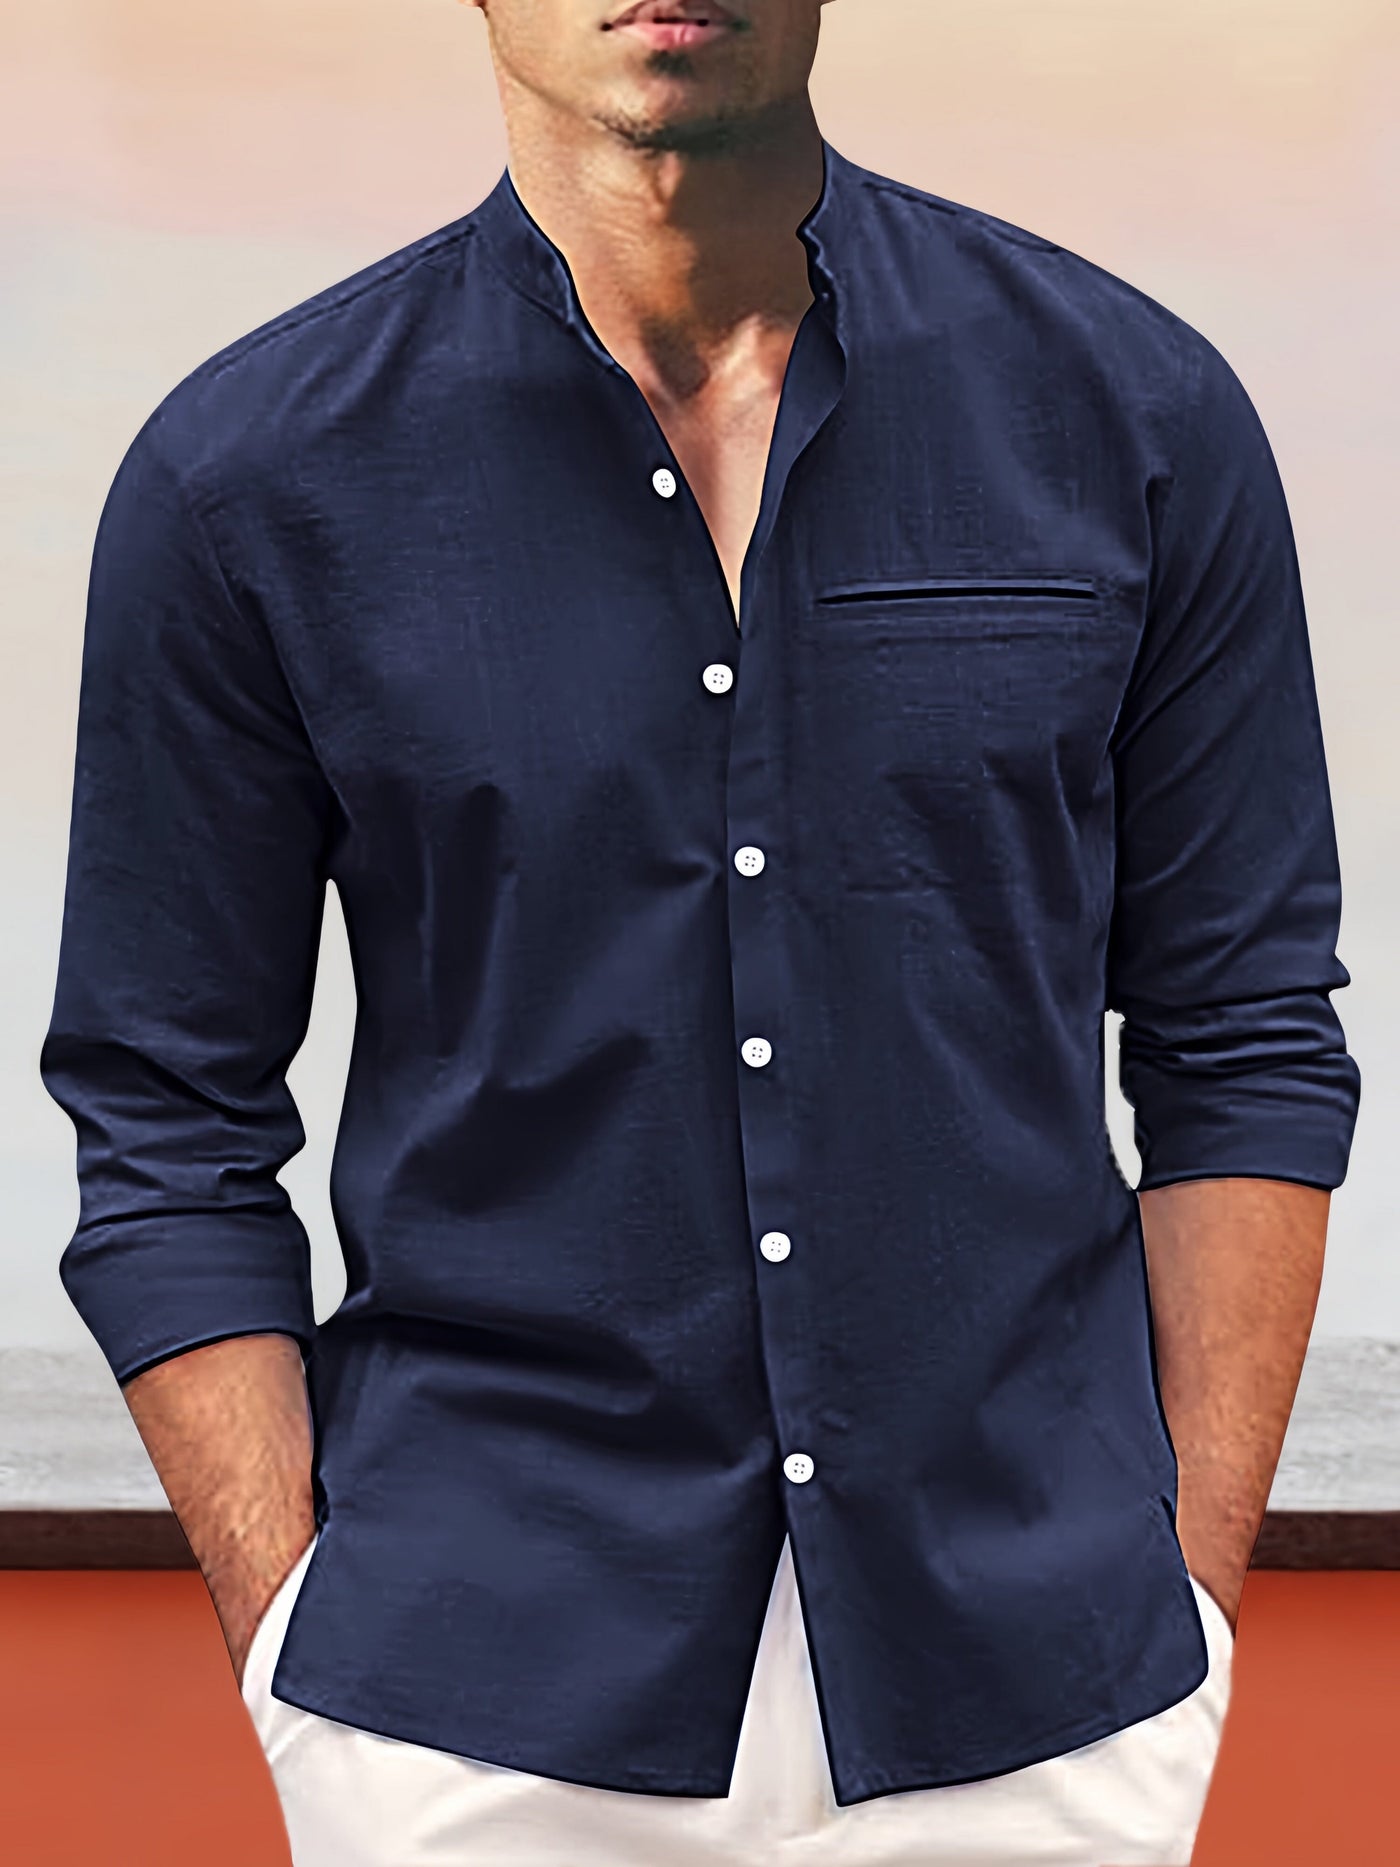 Cotton Linen Long Sleeve Shirt Shirts coofandystore Navy Blue M 